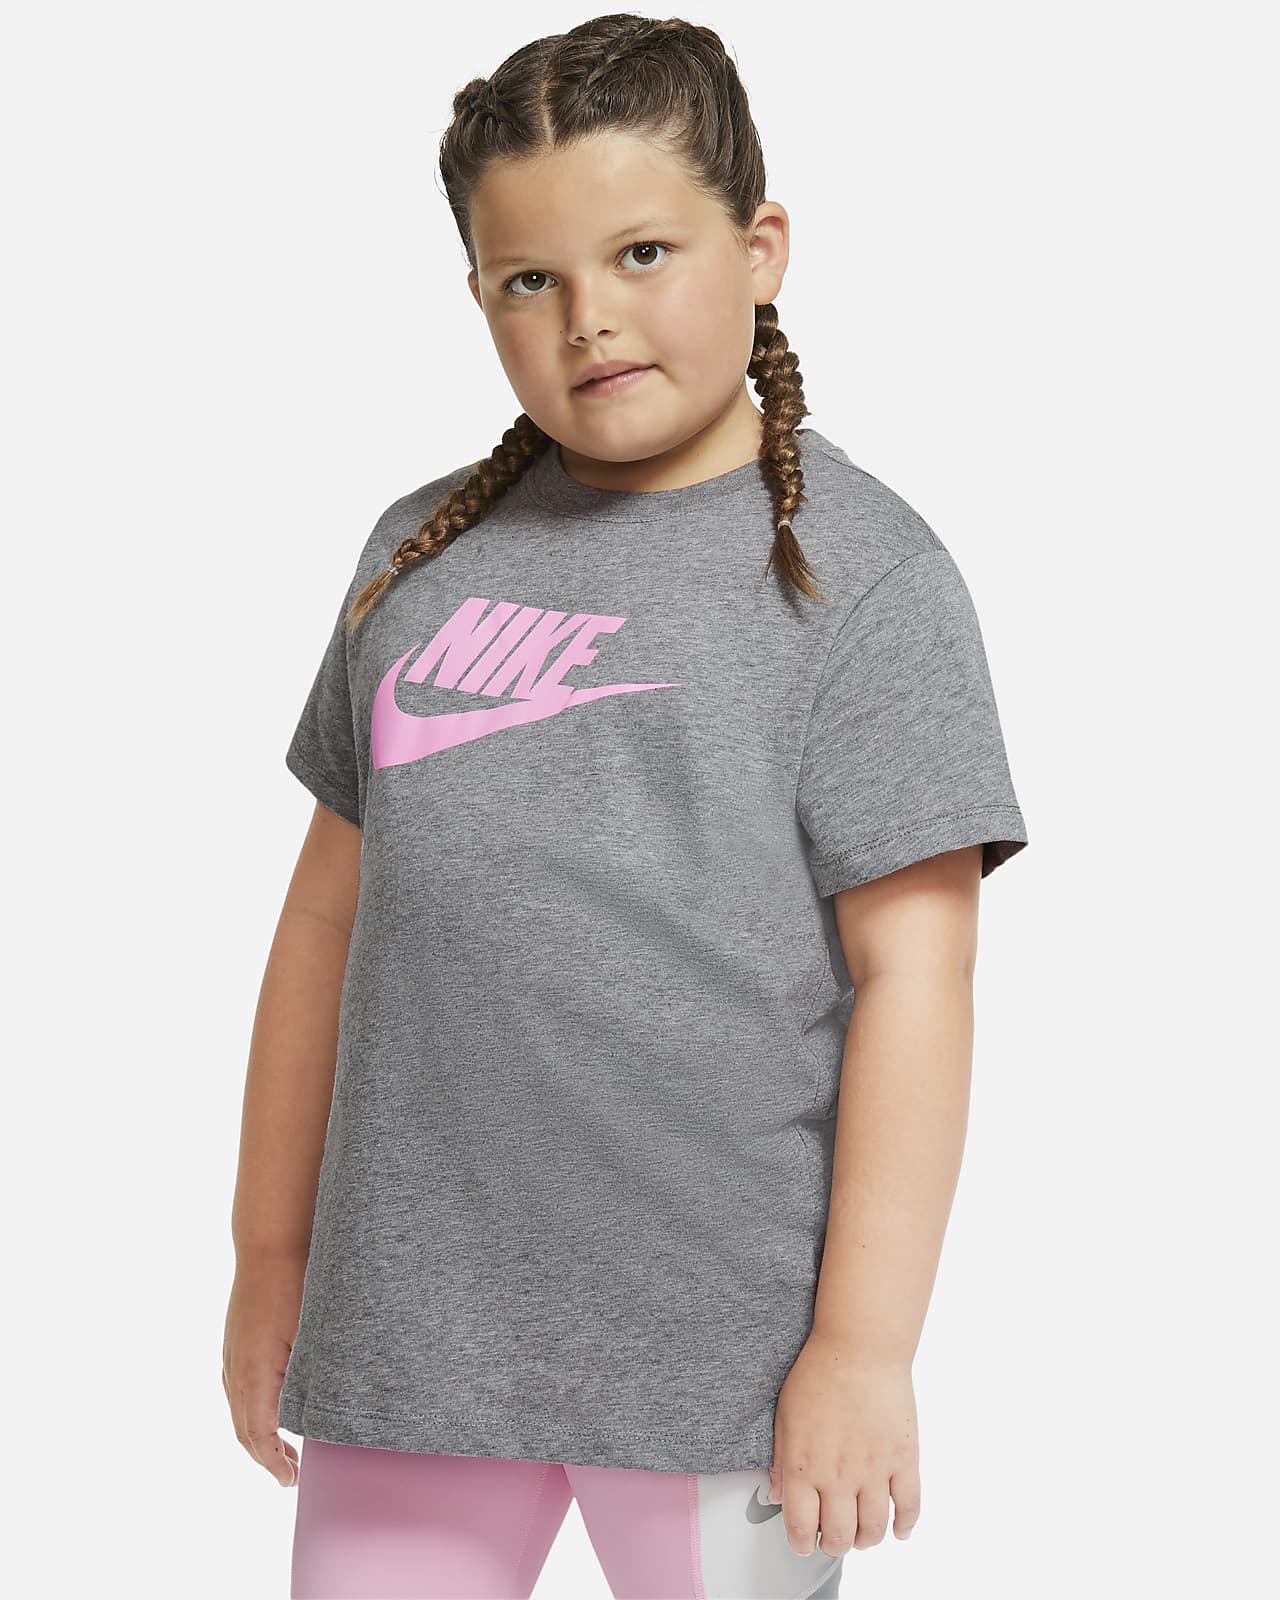 nike childrens t shirt sizes